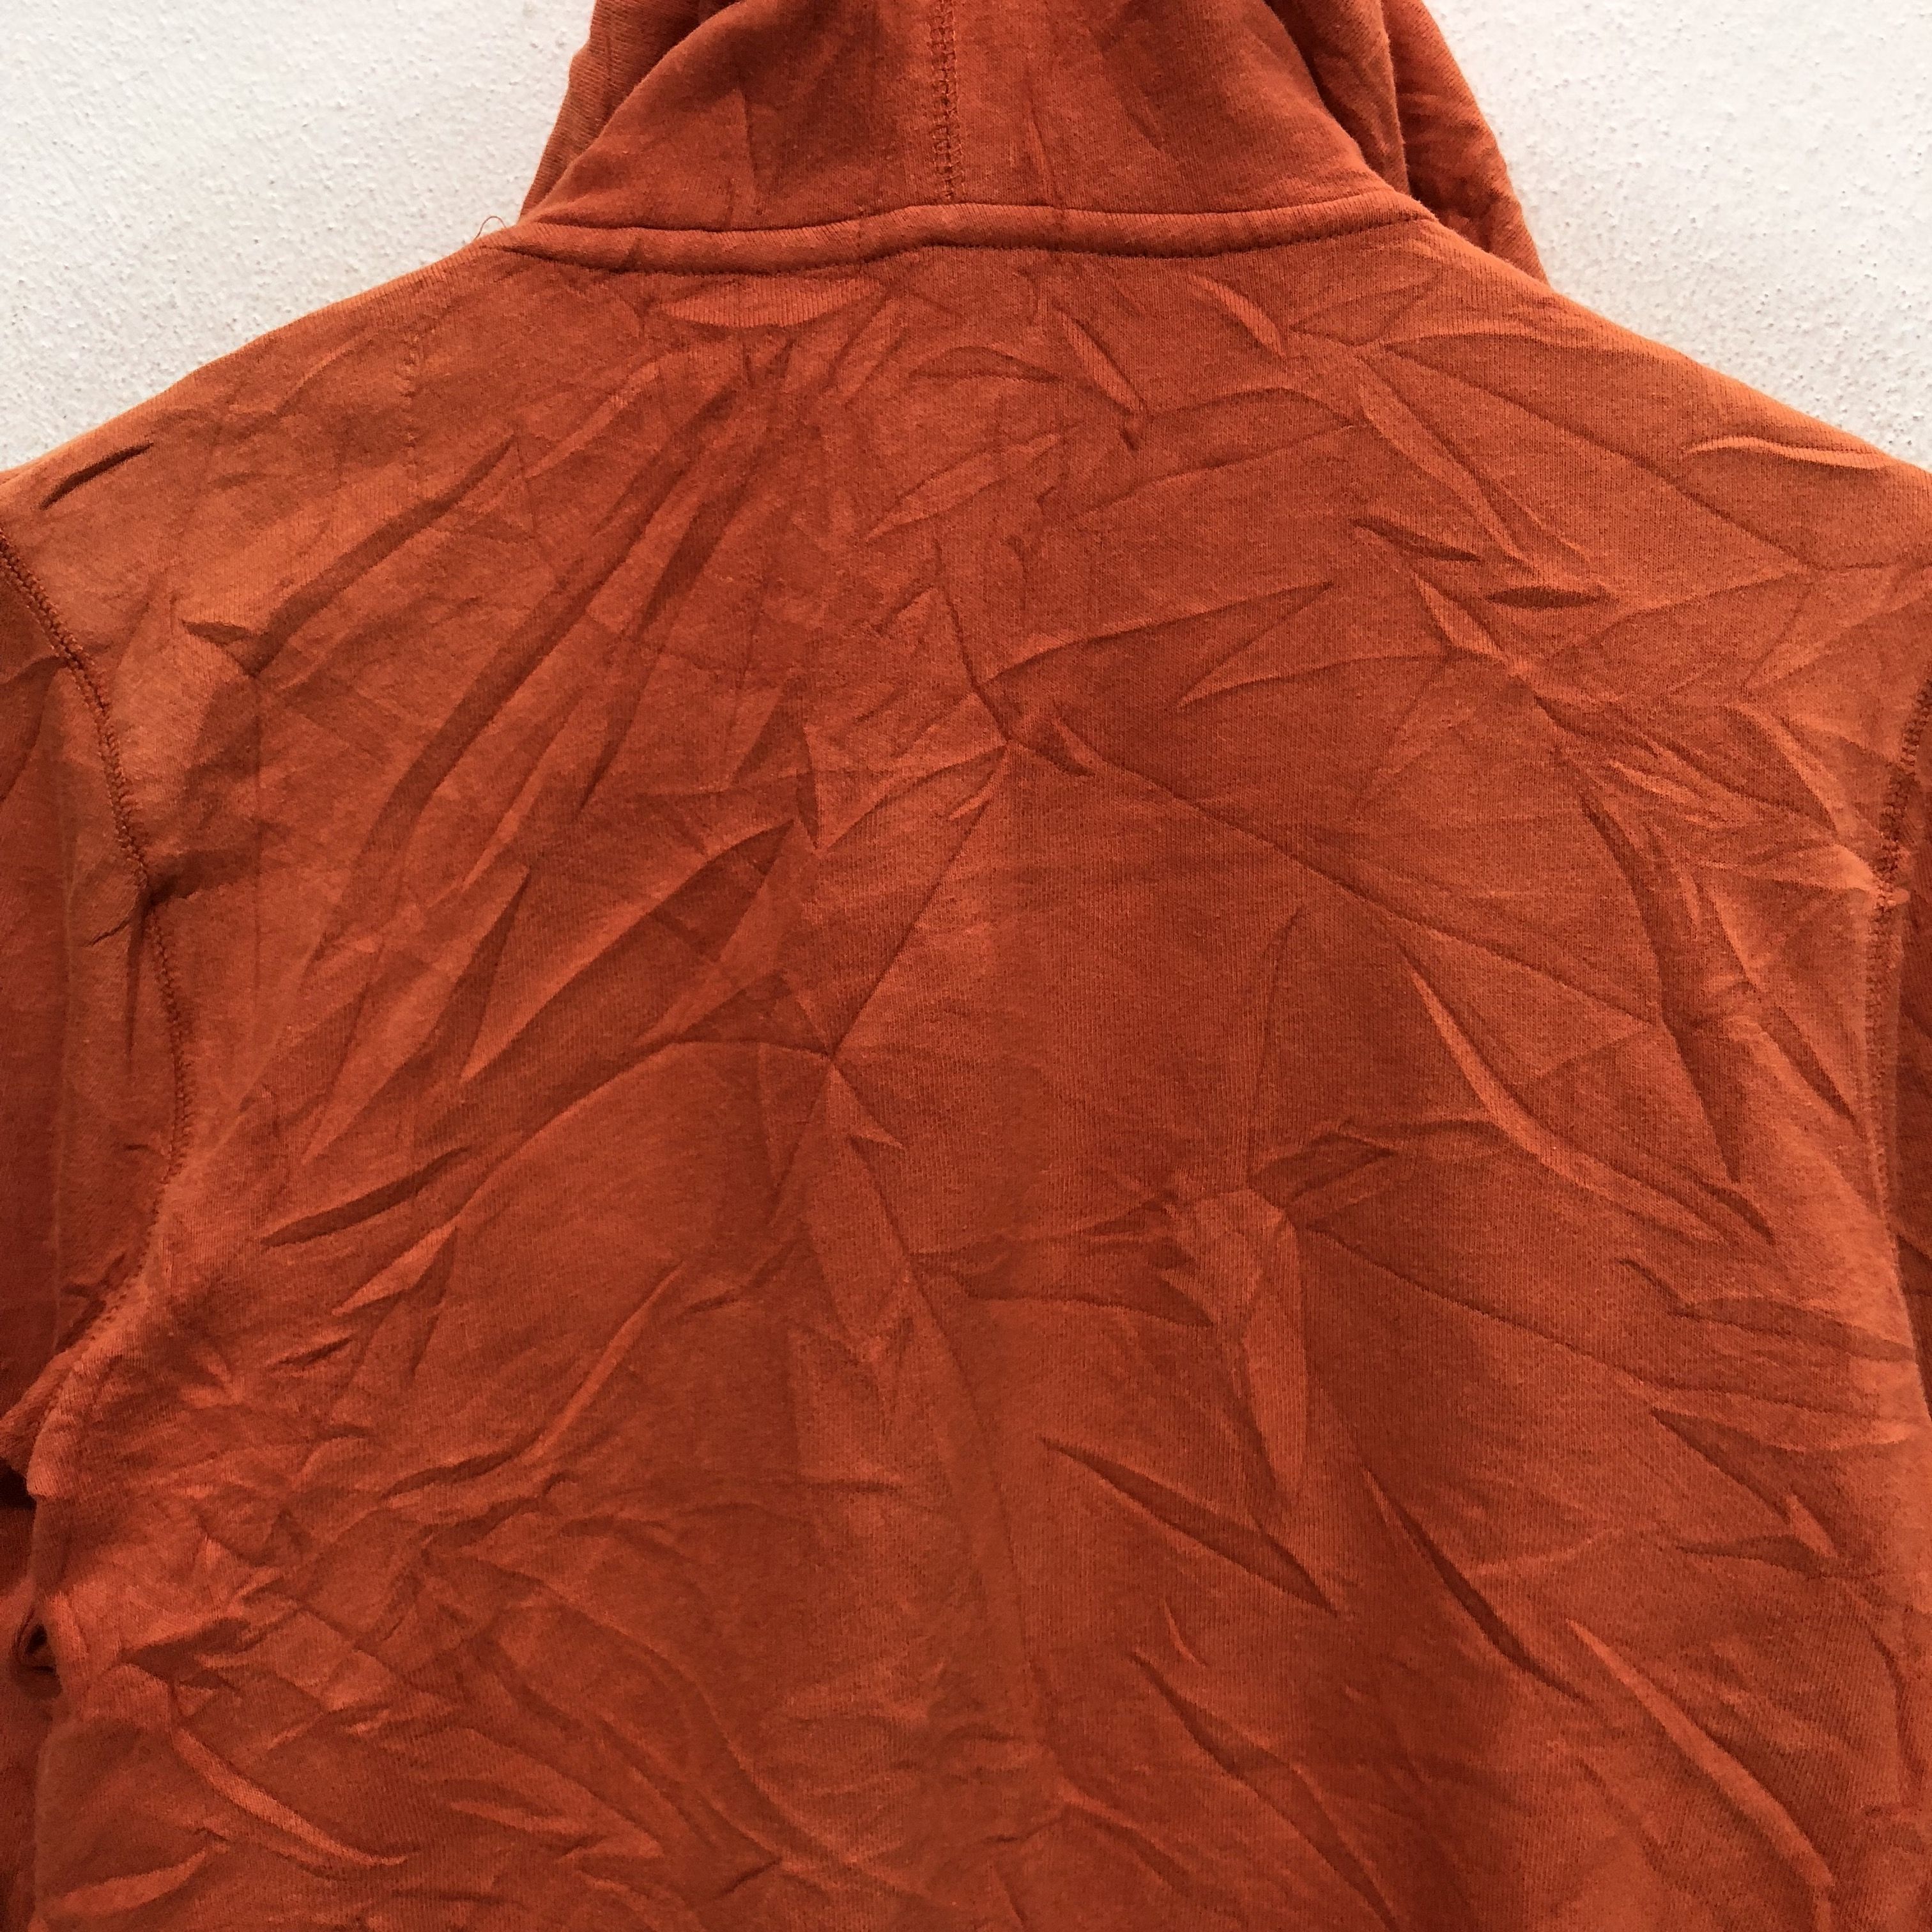 Gap Gap Zip Up Hoodie Sweater Spell Out Orange Sweatshirt Size Large Size US L / EU 52-54 / 3 - 7 Thumbnail